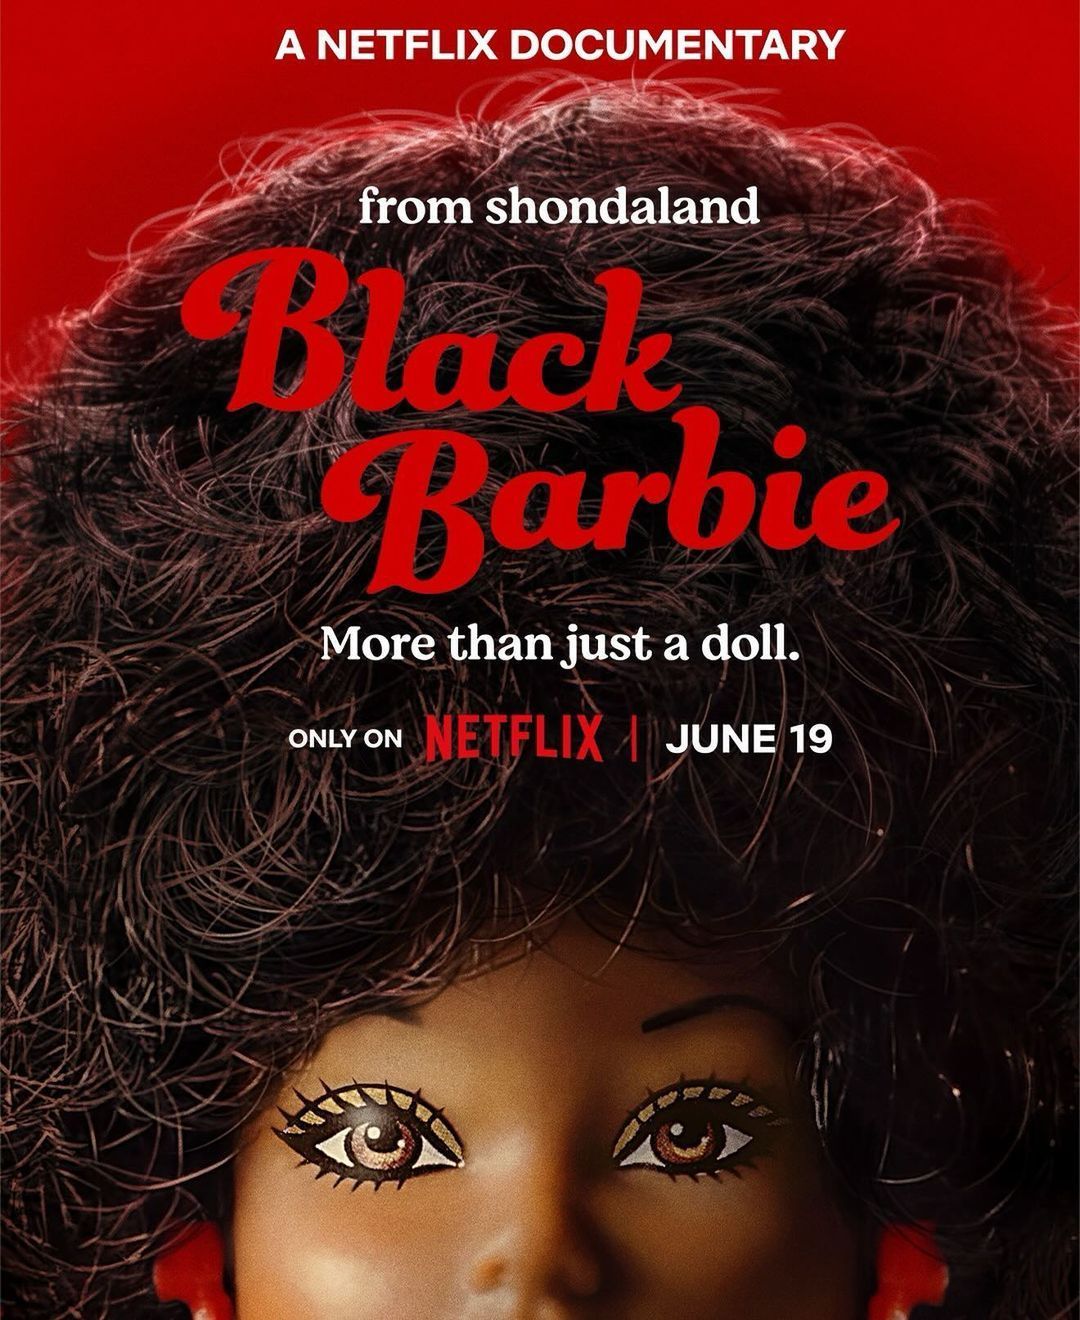 Black Barbie doll documentary on Netflix